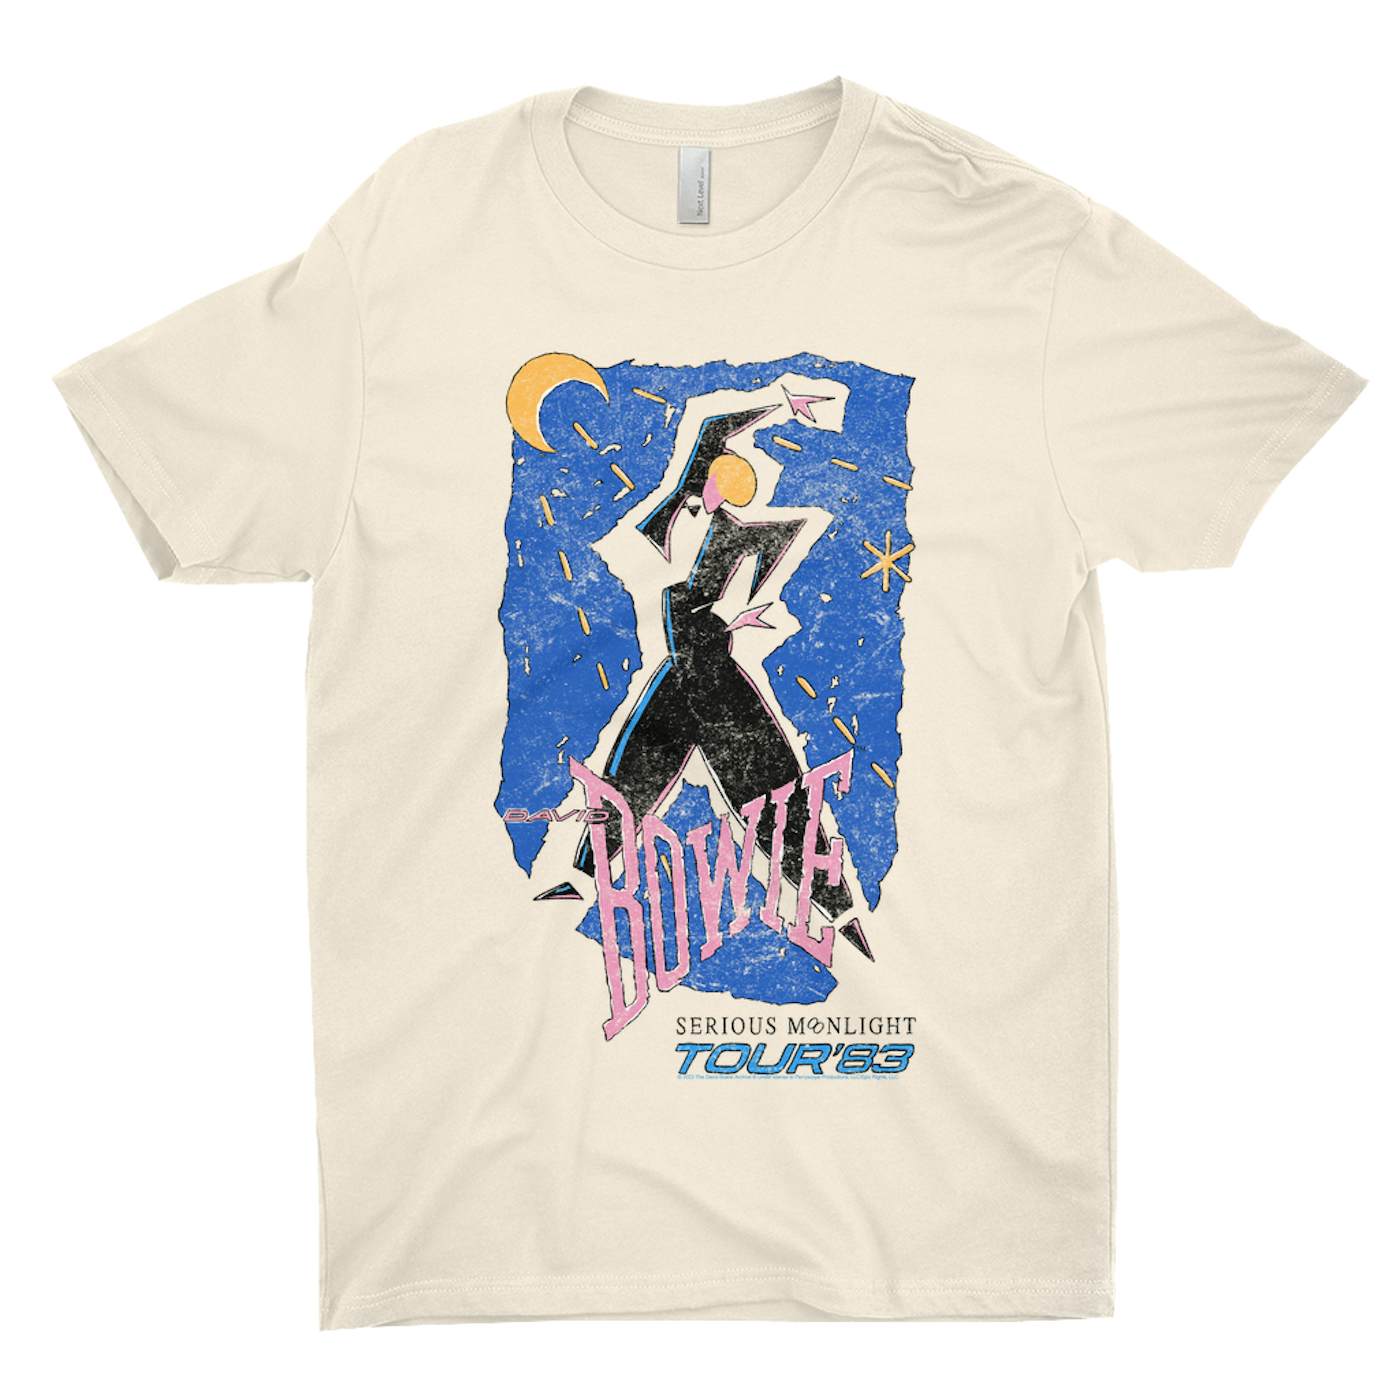 David Bowie T-Shirt | Serious Moonlight Tour 1984 Sketched (Merchbar Exclusive) David Bowie Shirt